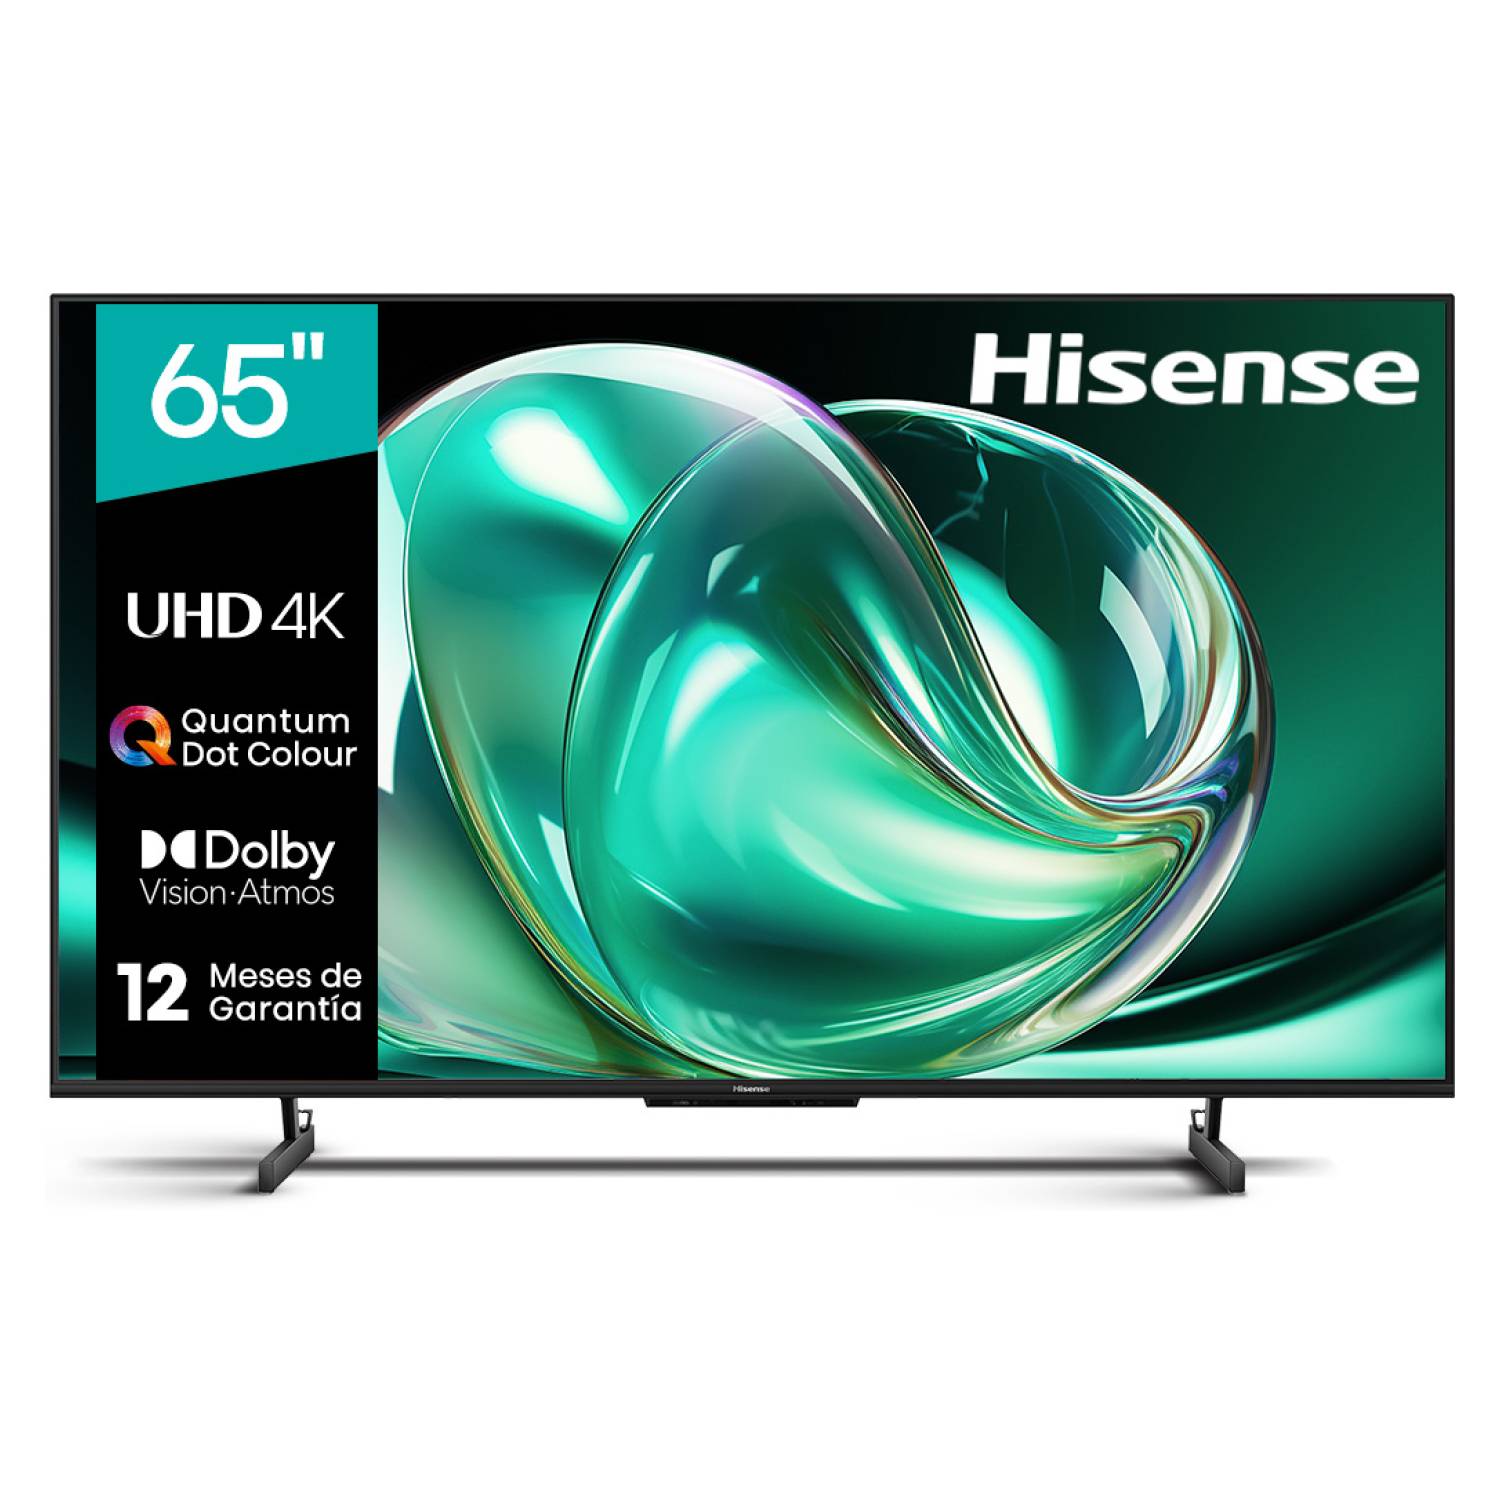 Productos Premier  Ultra HD Smart TV de 65”